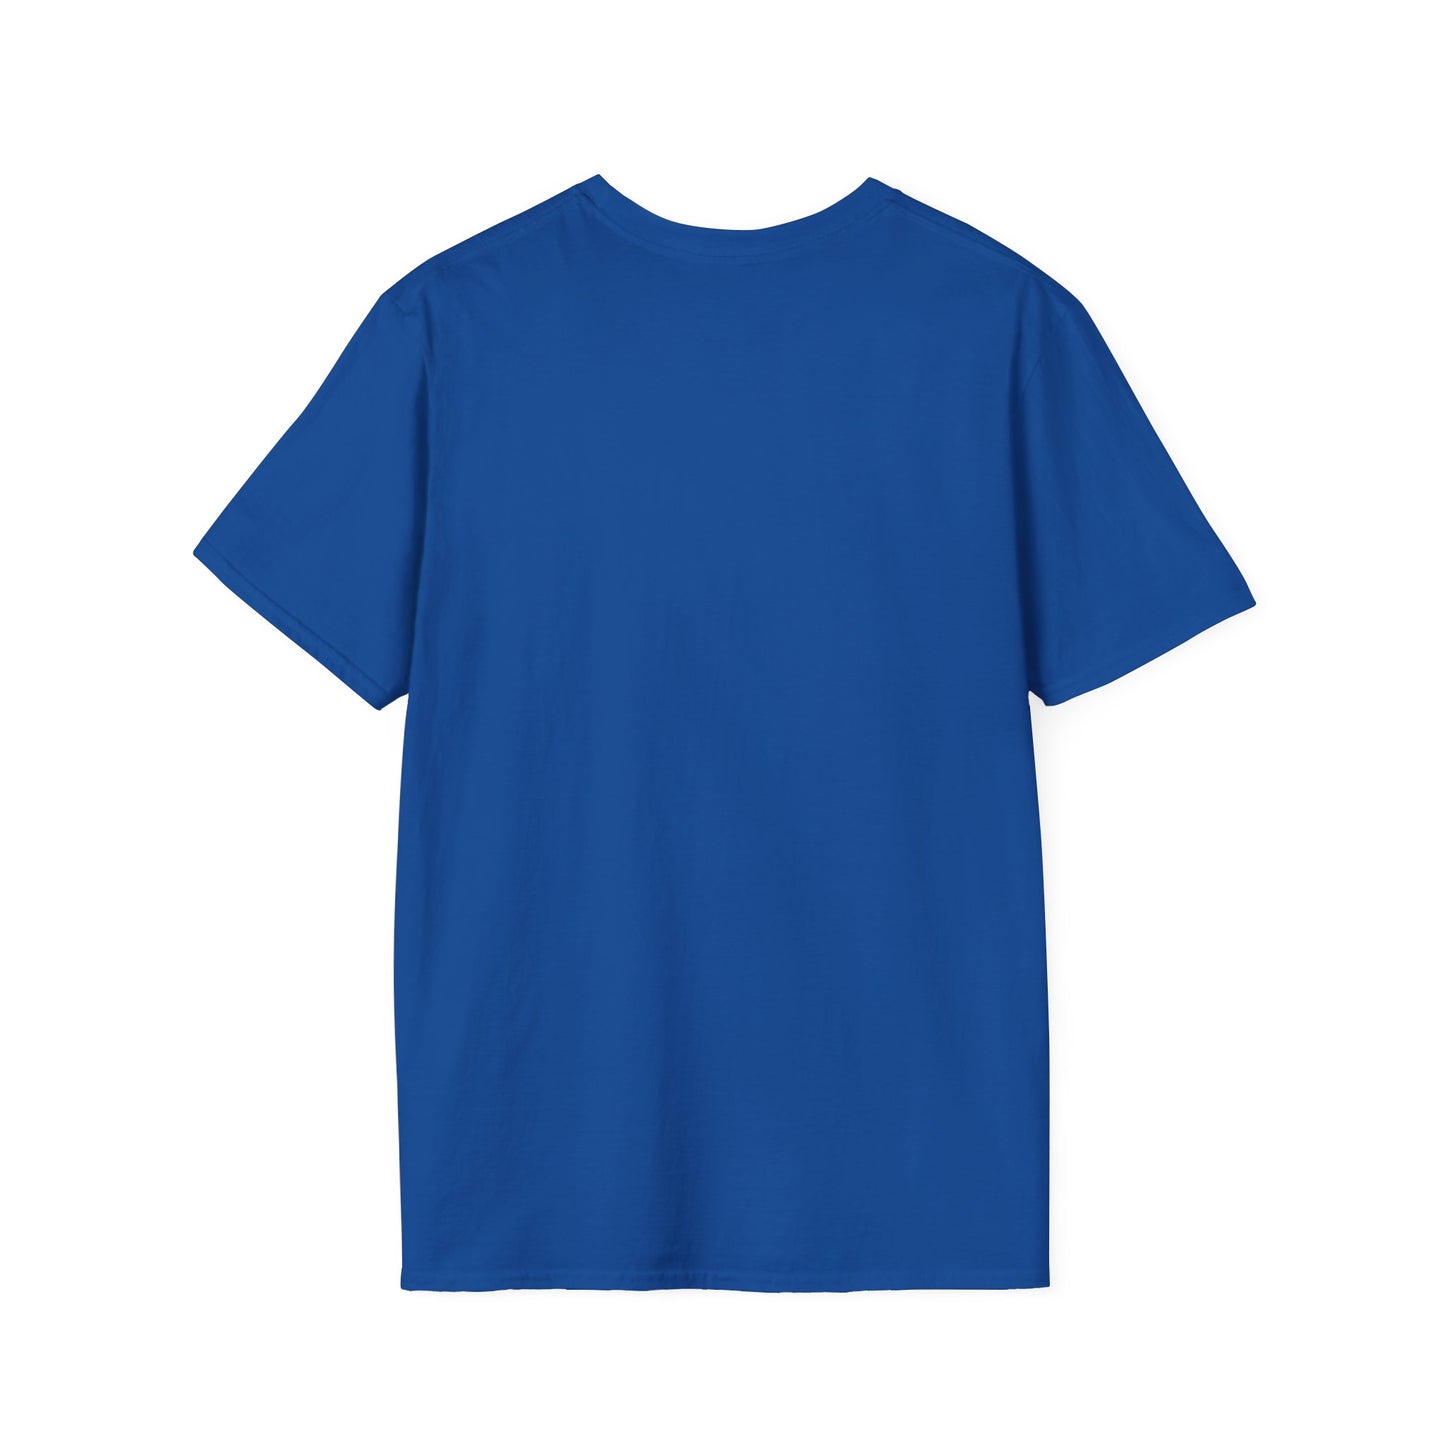 Created For This Season Softball T-Shirt